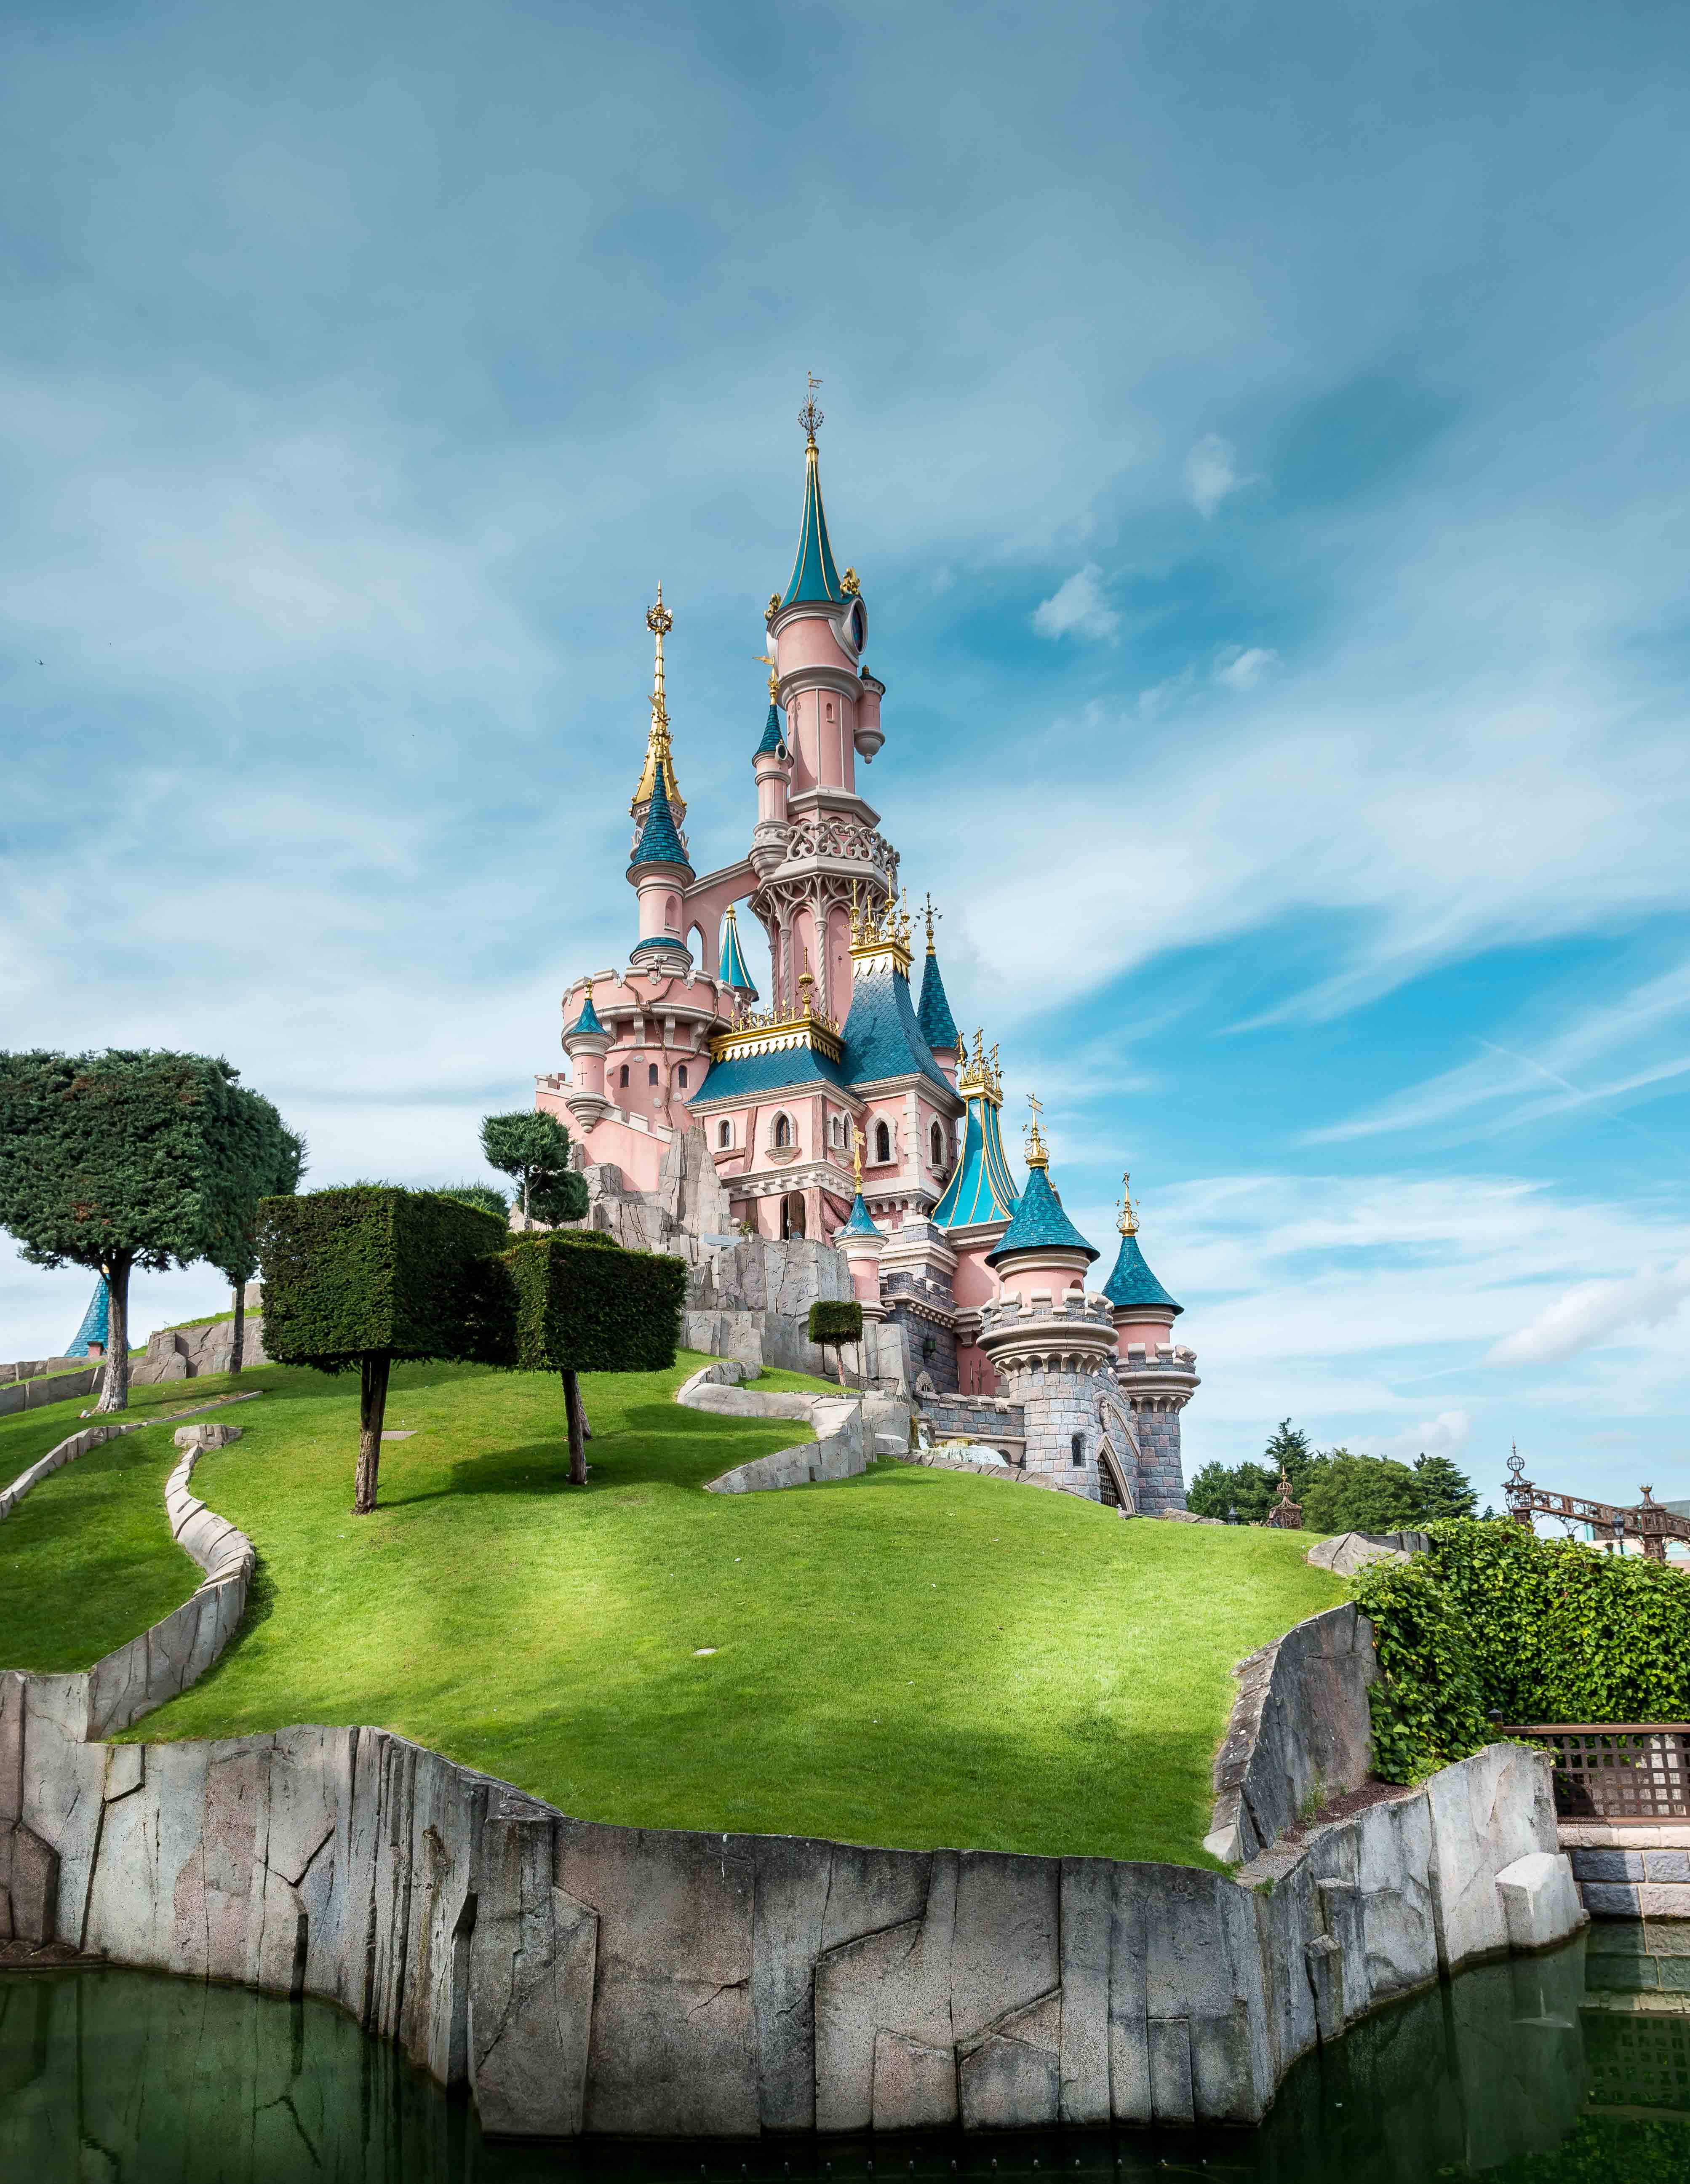 Disneyland's dreamland in paris. Editorial use only., disneyland paris